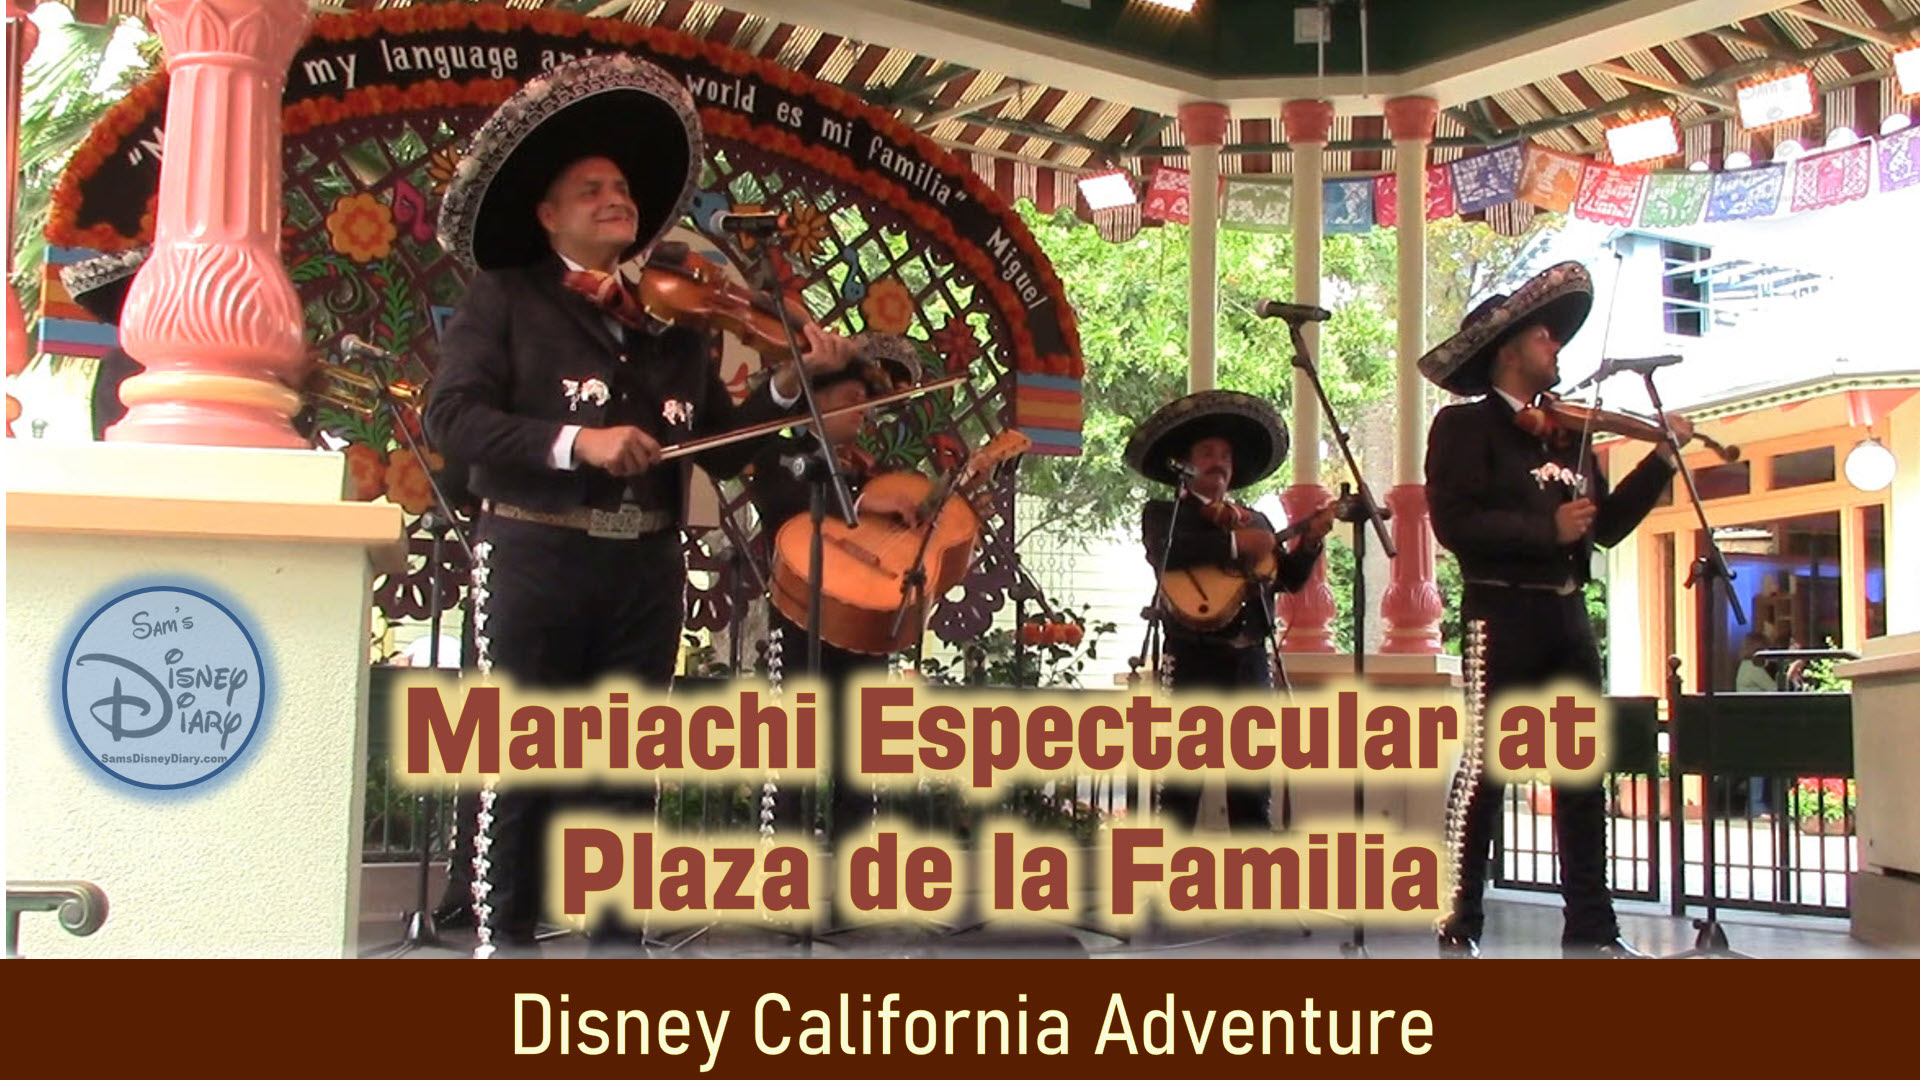 Mariachi Espectacular Plaza de la familia Disney California Adventure